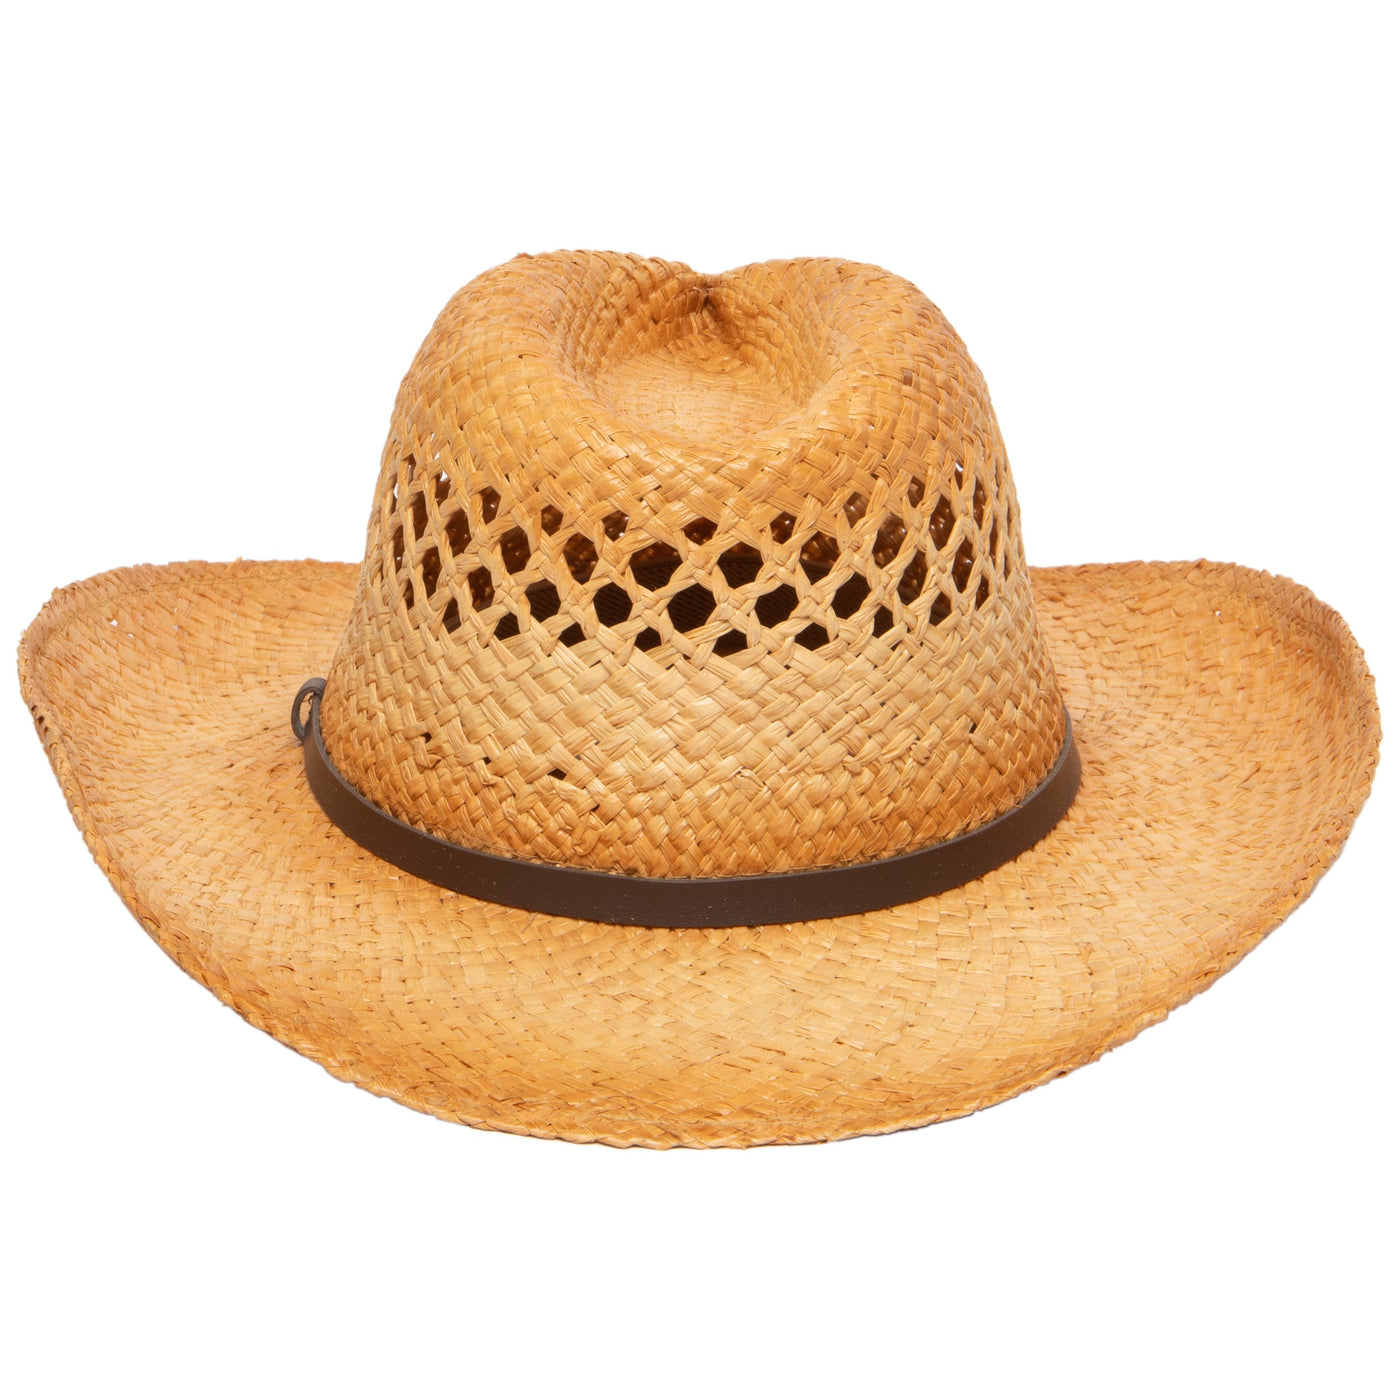 COWBOY - Women's Cowboy Hat With Leather Trim